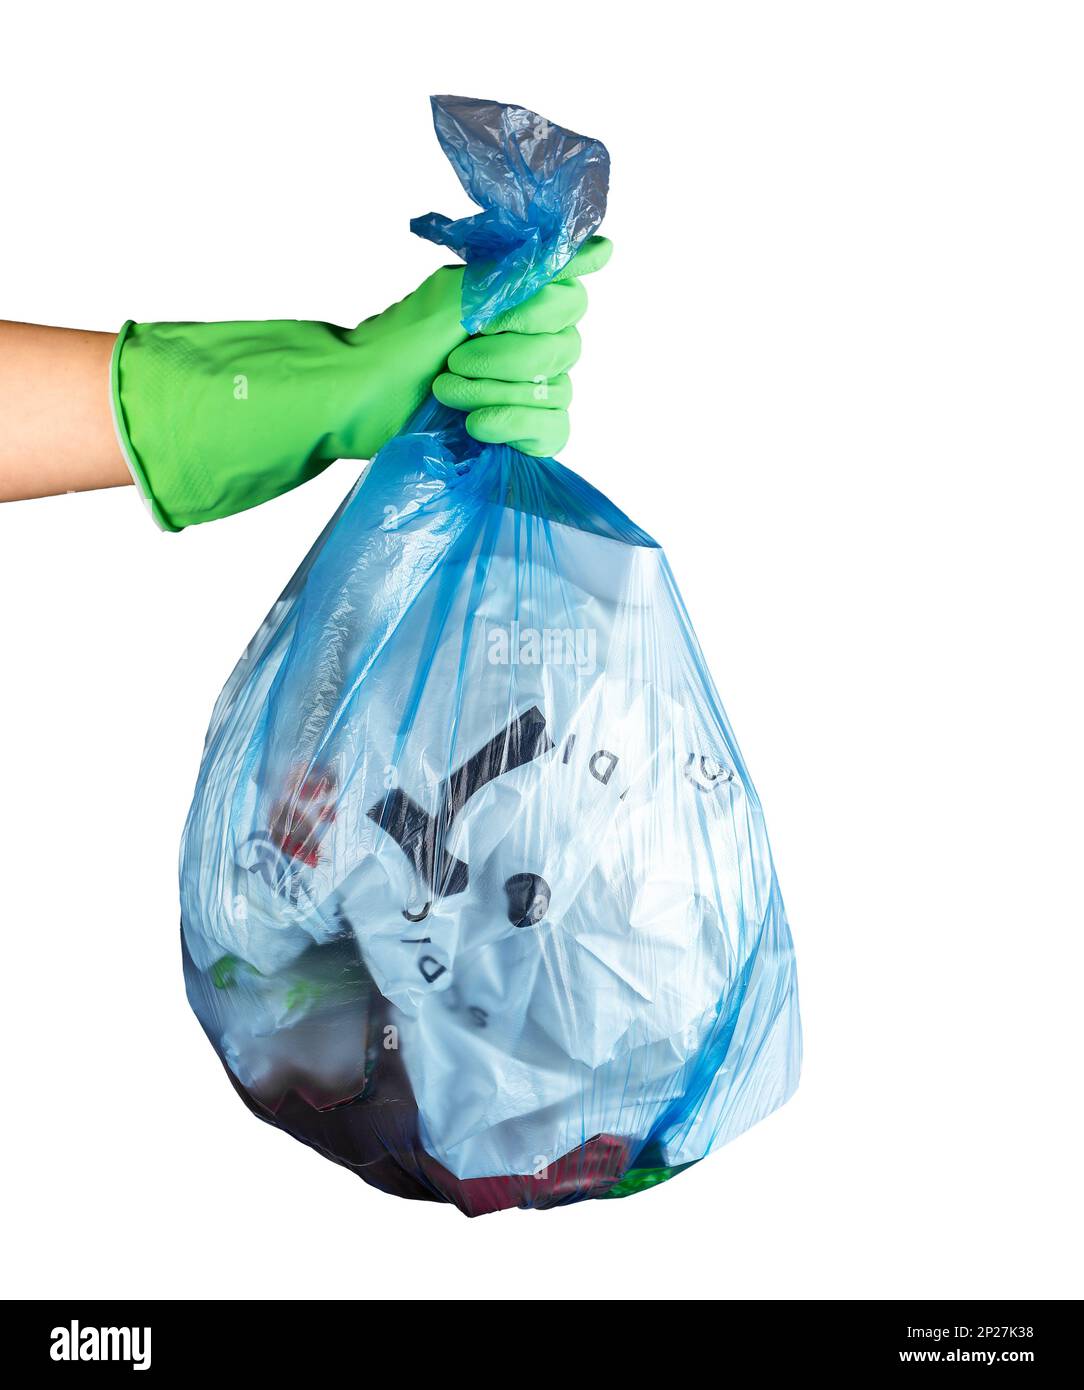 bin bag garbage, Bin,Trash, Garbage, Rubbish, Plastic Bags pile isolated on  background white Stock Photo - Alamy